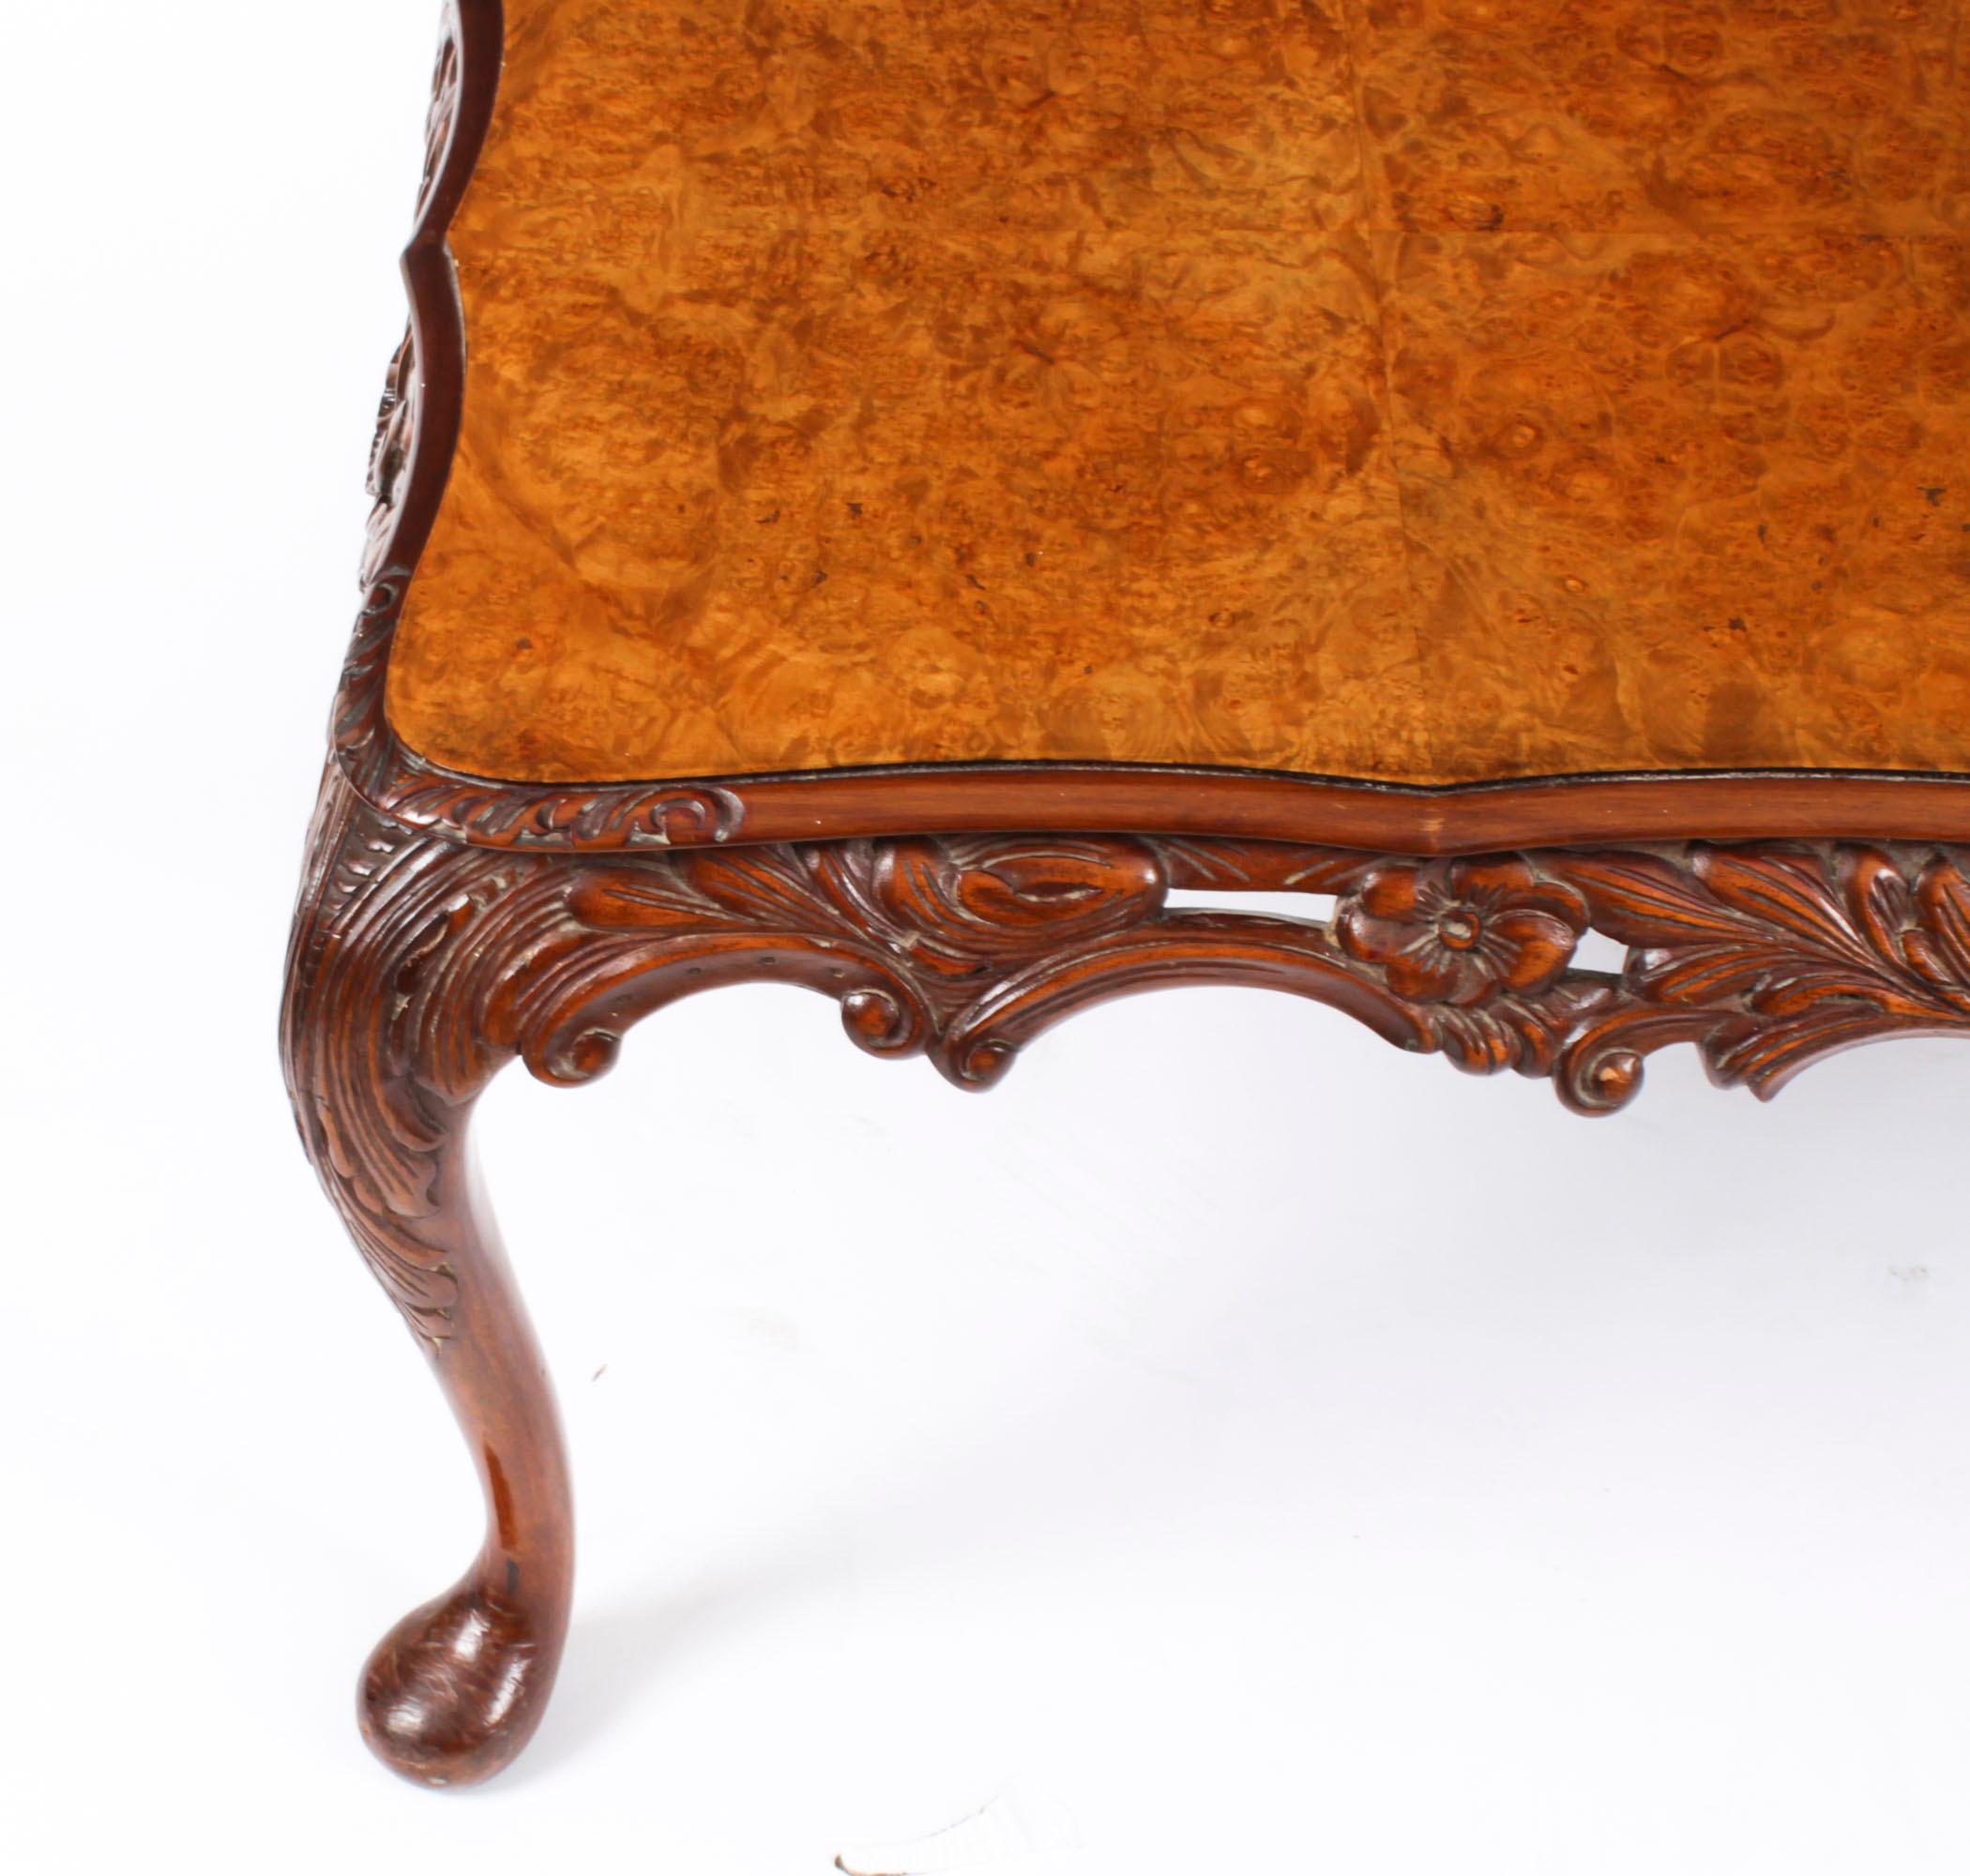 Antique Queen Anne Revival Burr Walnut Coffee Table c.1920 For Sale 2